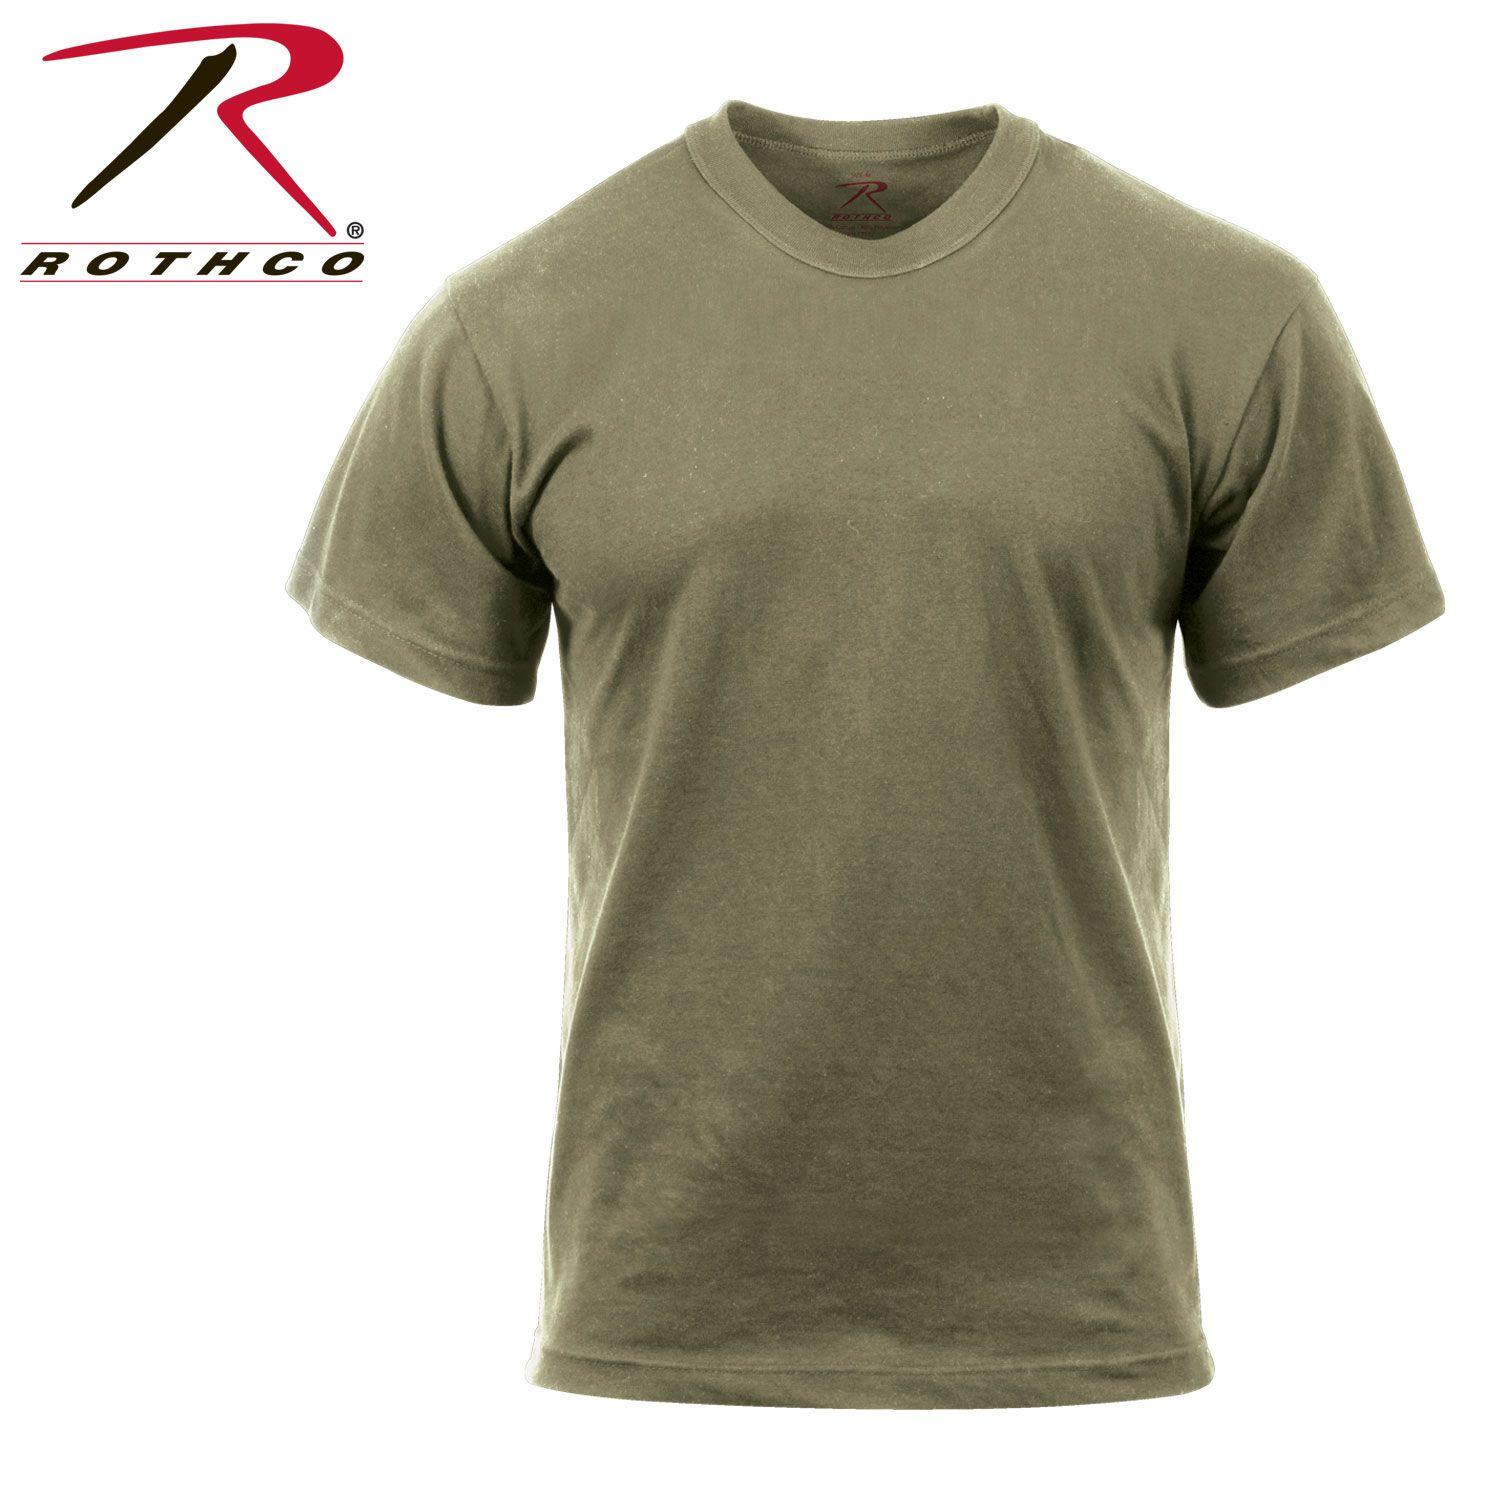 Coyote Clothing Logo - Rothco AR 670-1 Coyote T-Shirt